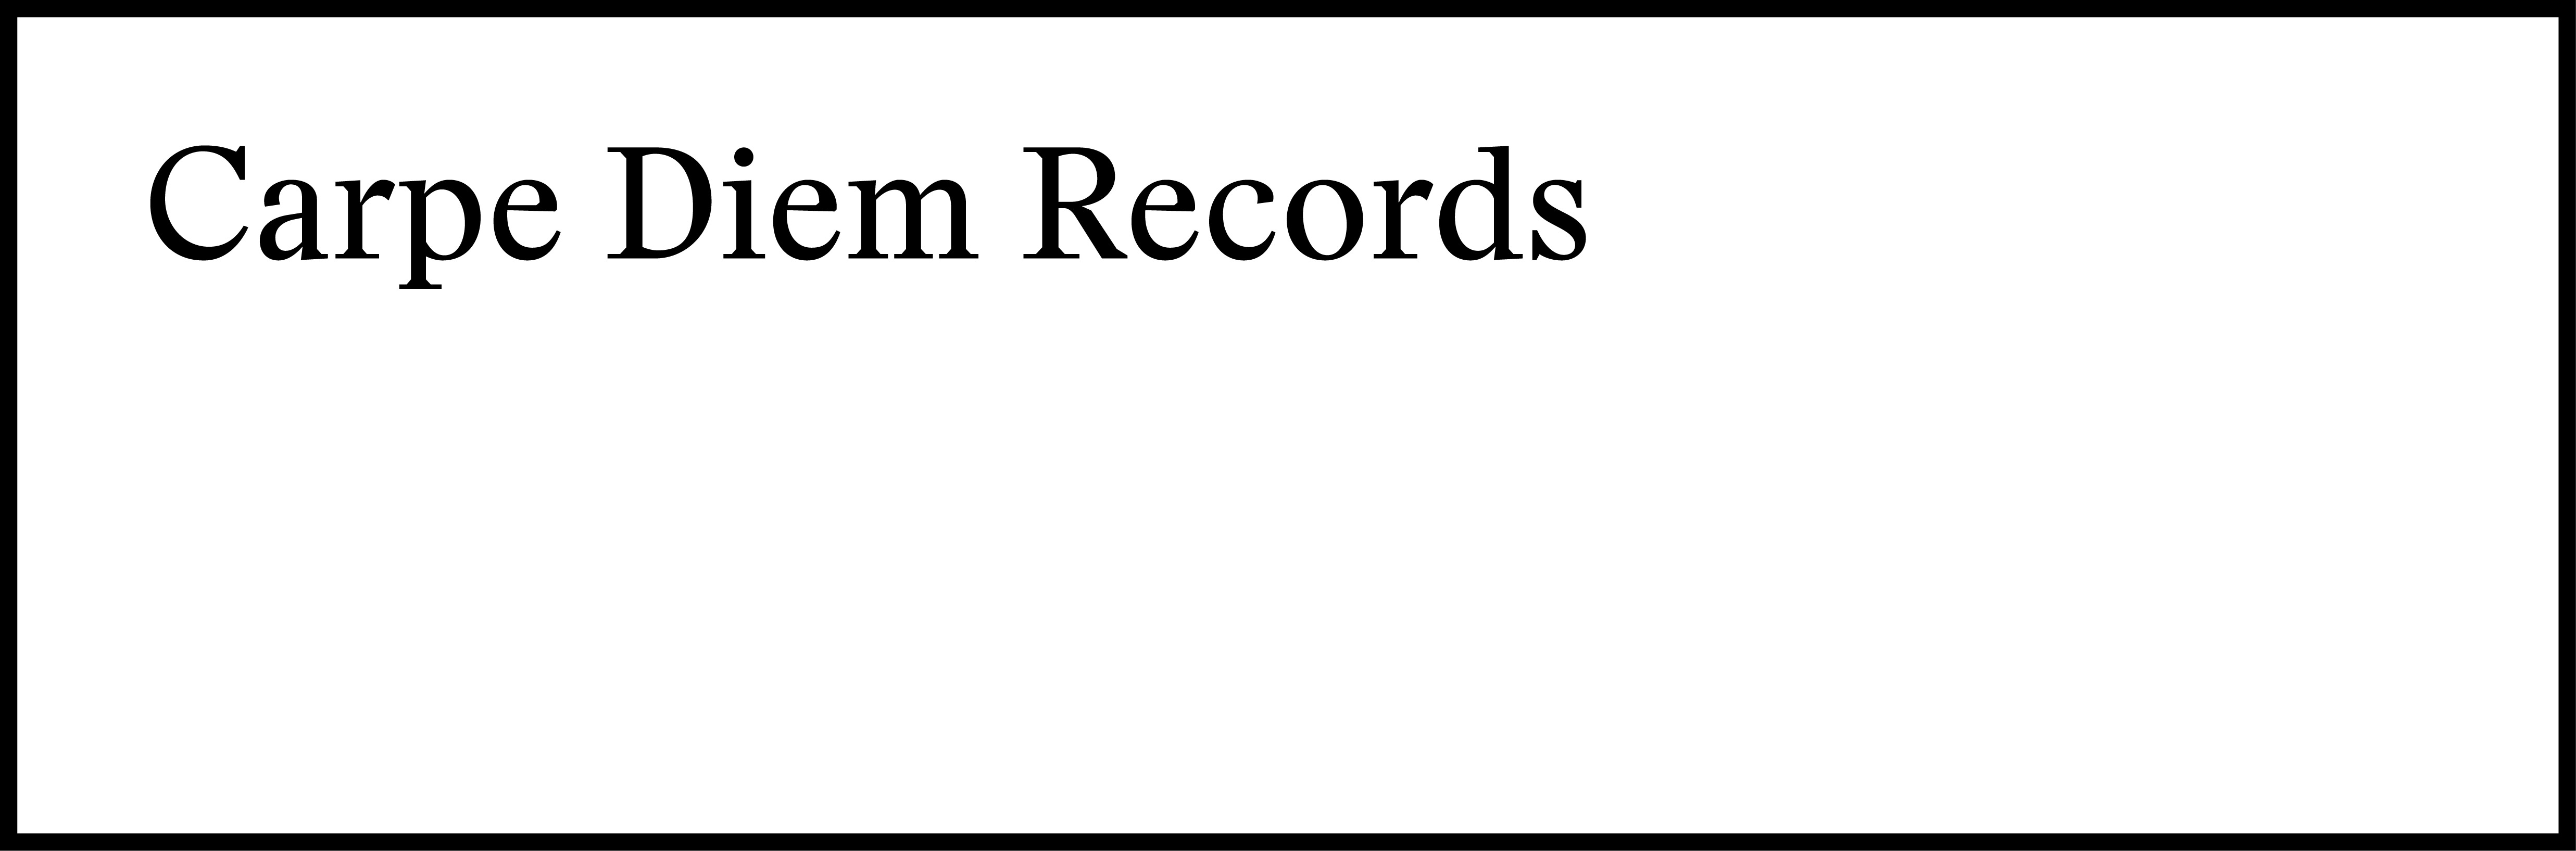 Carpe Diem Records